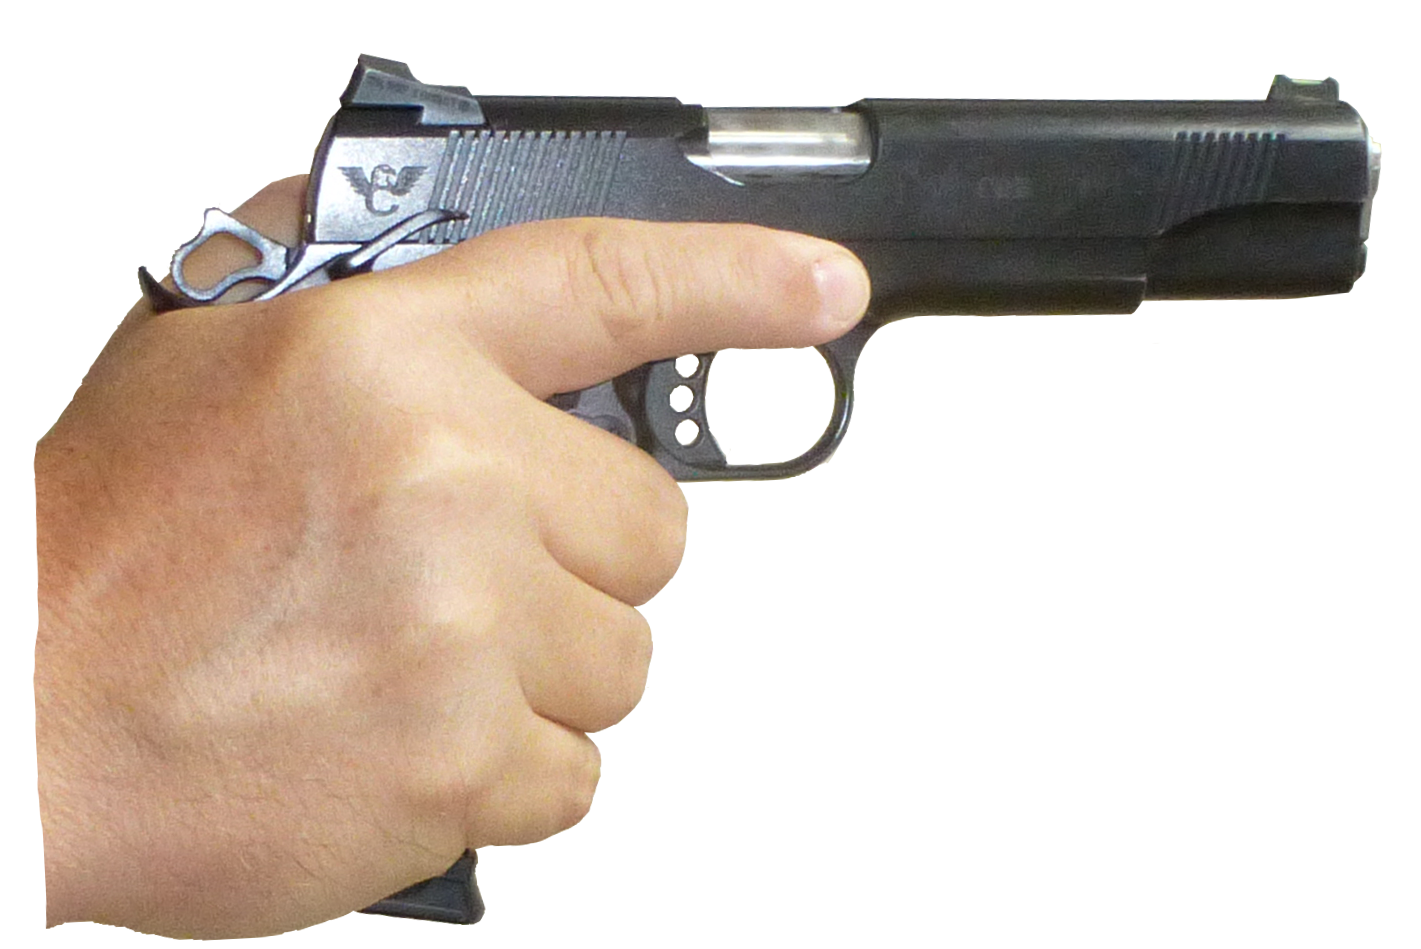 Download Gun In Hand Image HQ PNG Image FreePNGImg.